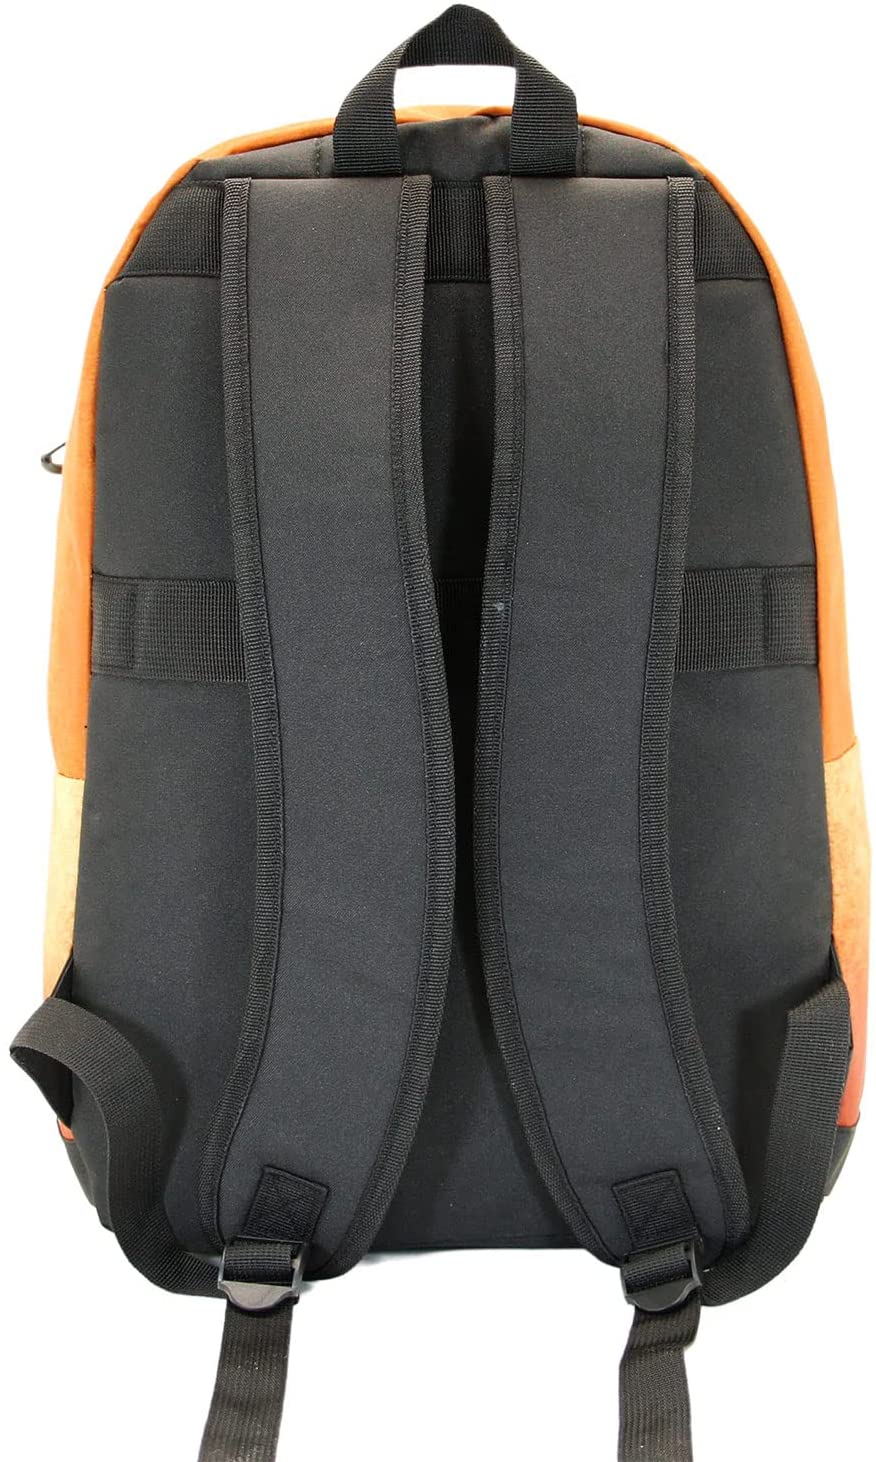 Dragon Ball Impulse-Fan HS Backpack, Orange